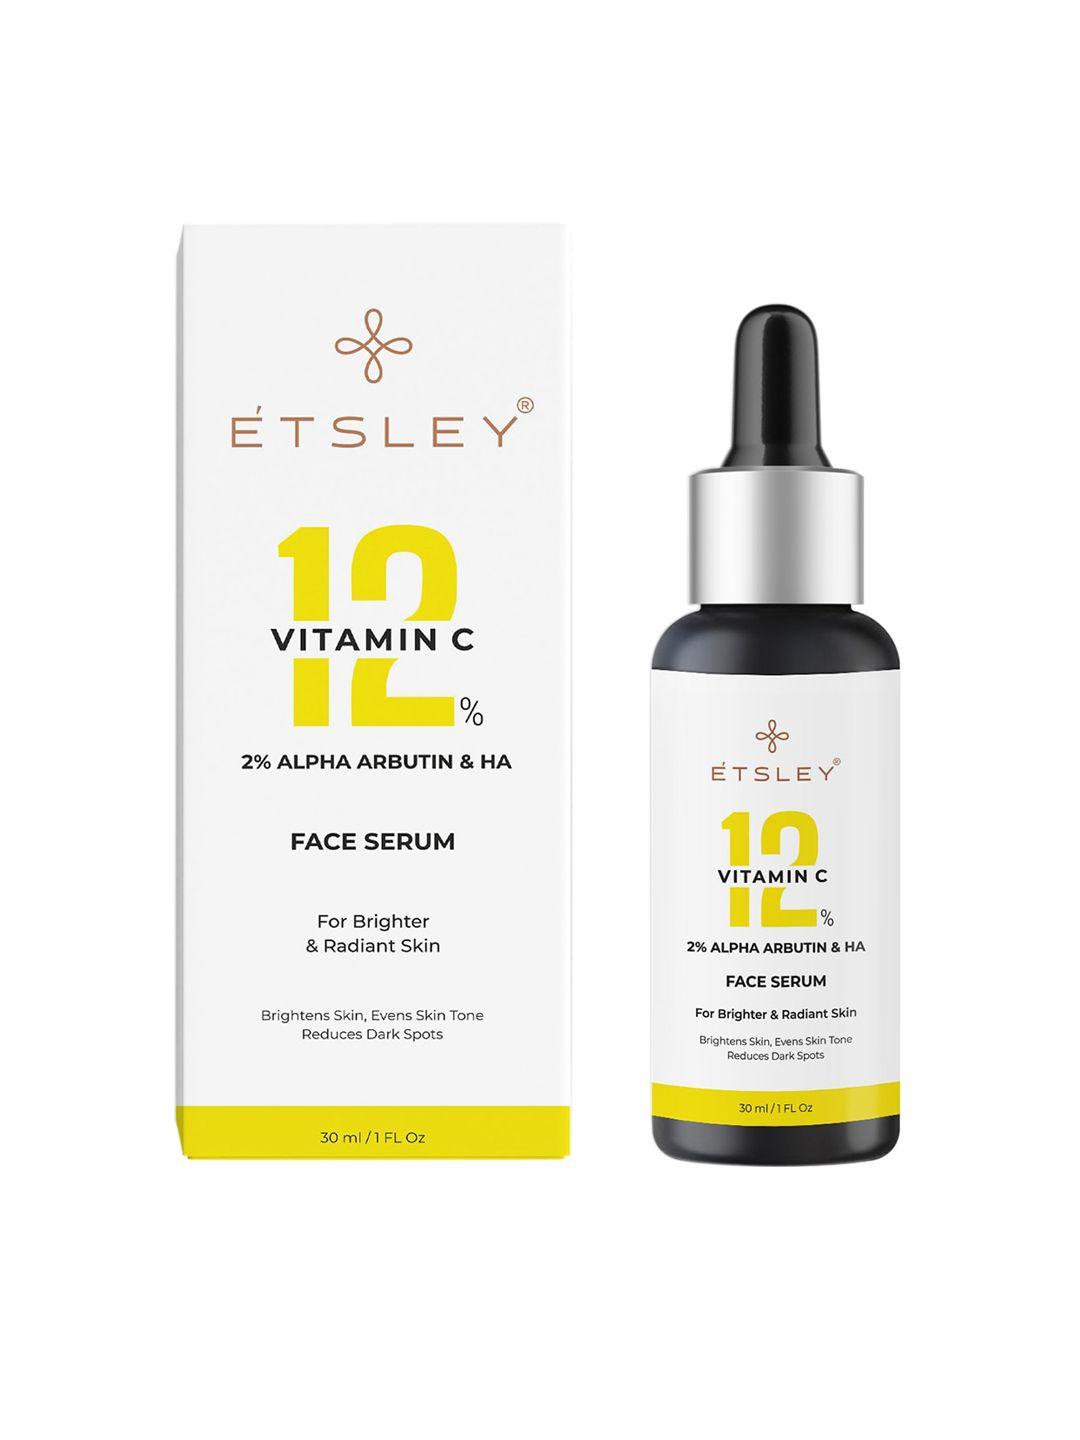 etsley unisex 12 vitamin c with alpha arbutin face serum 30ml